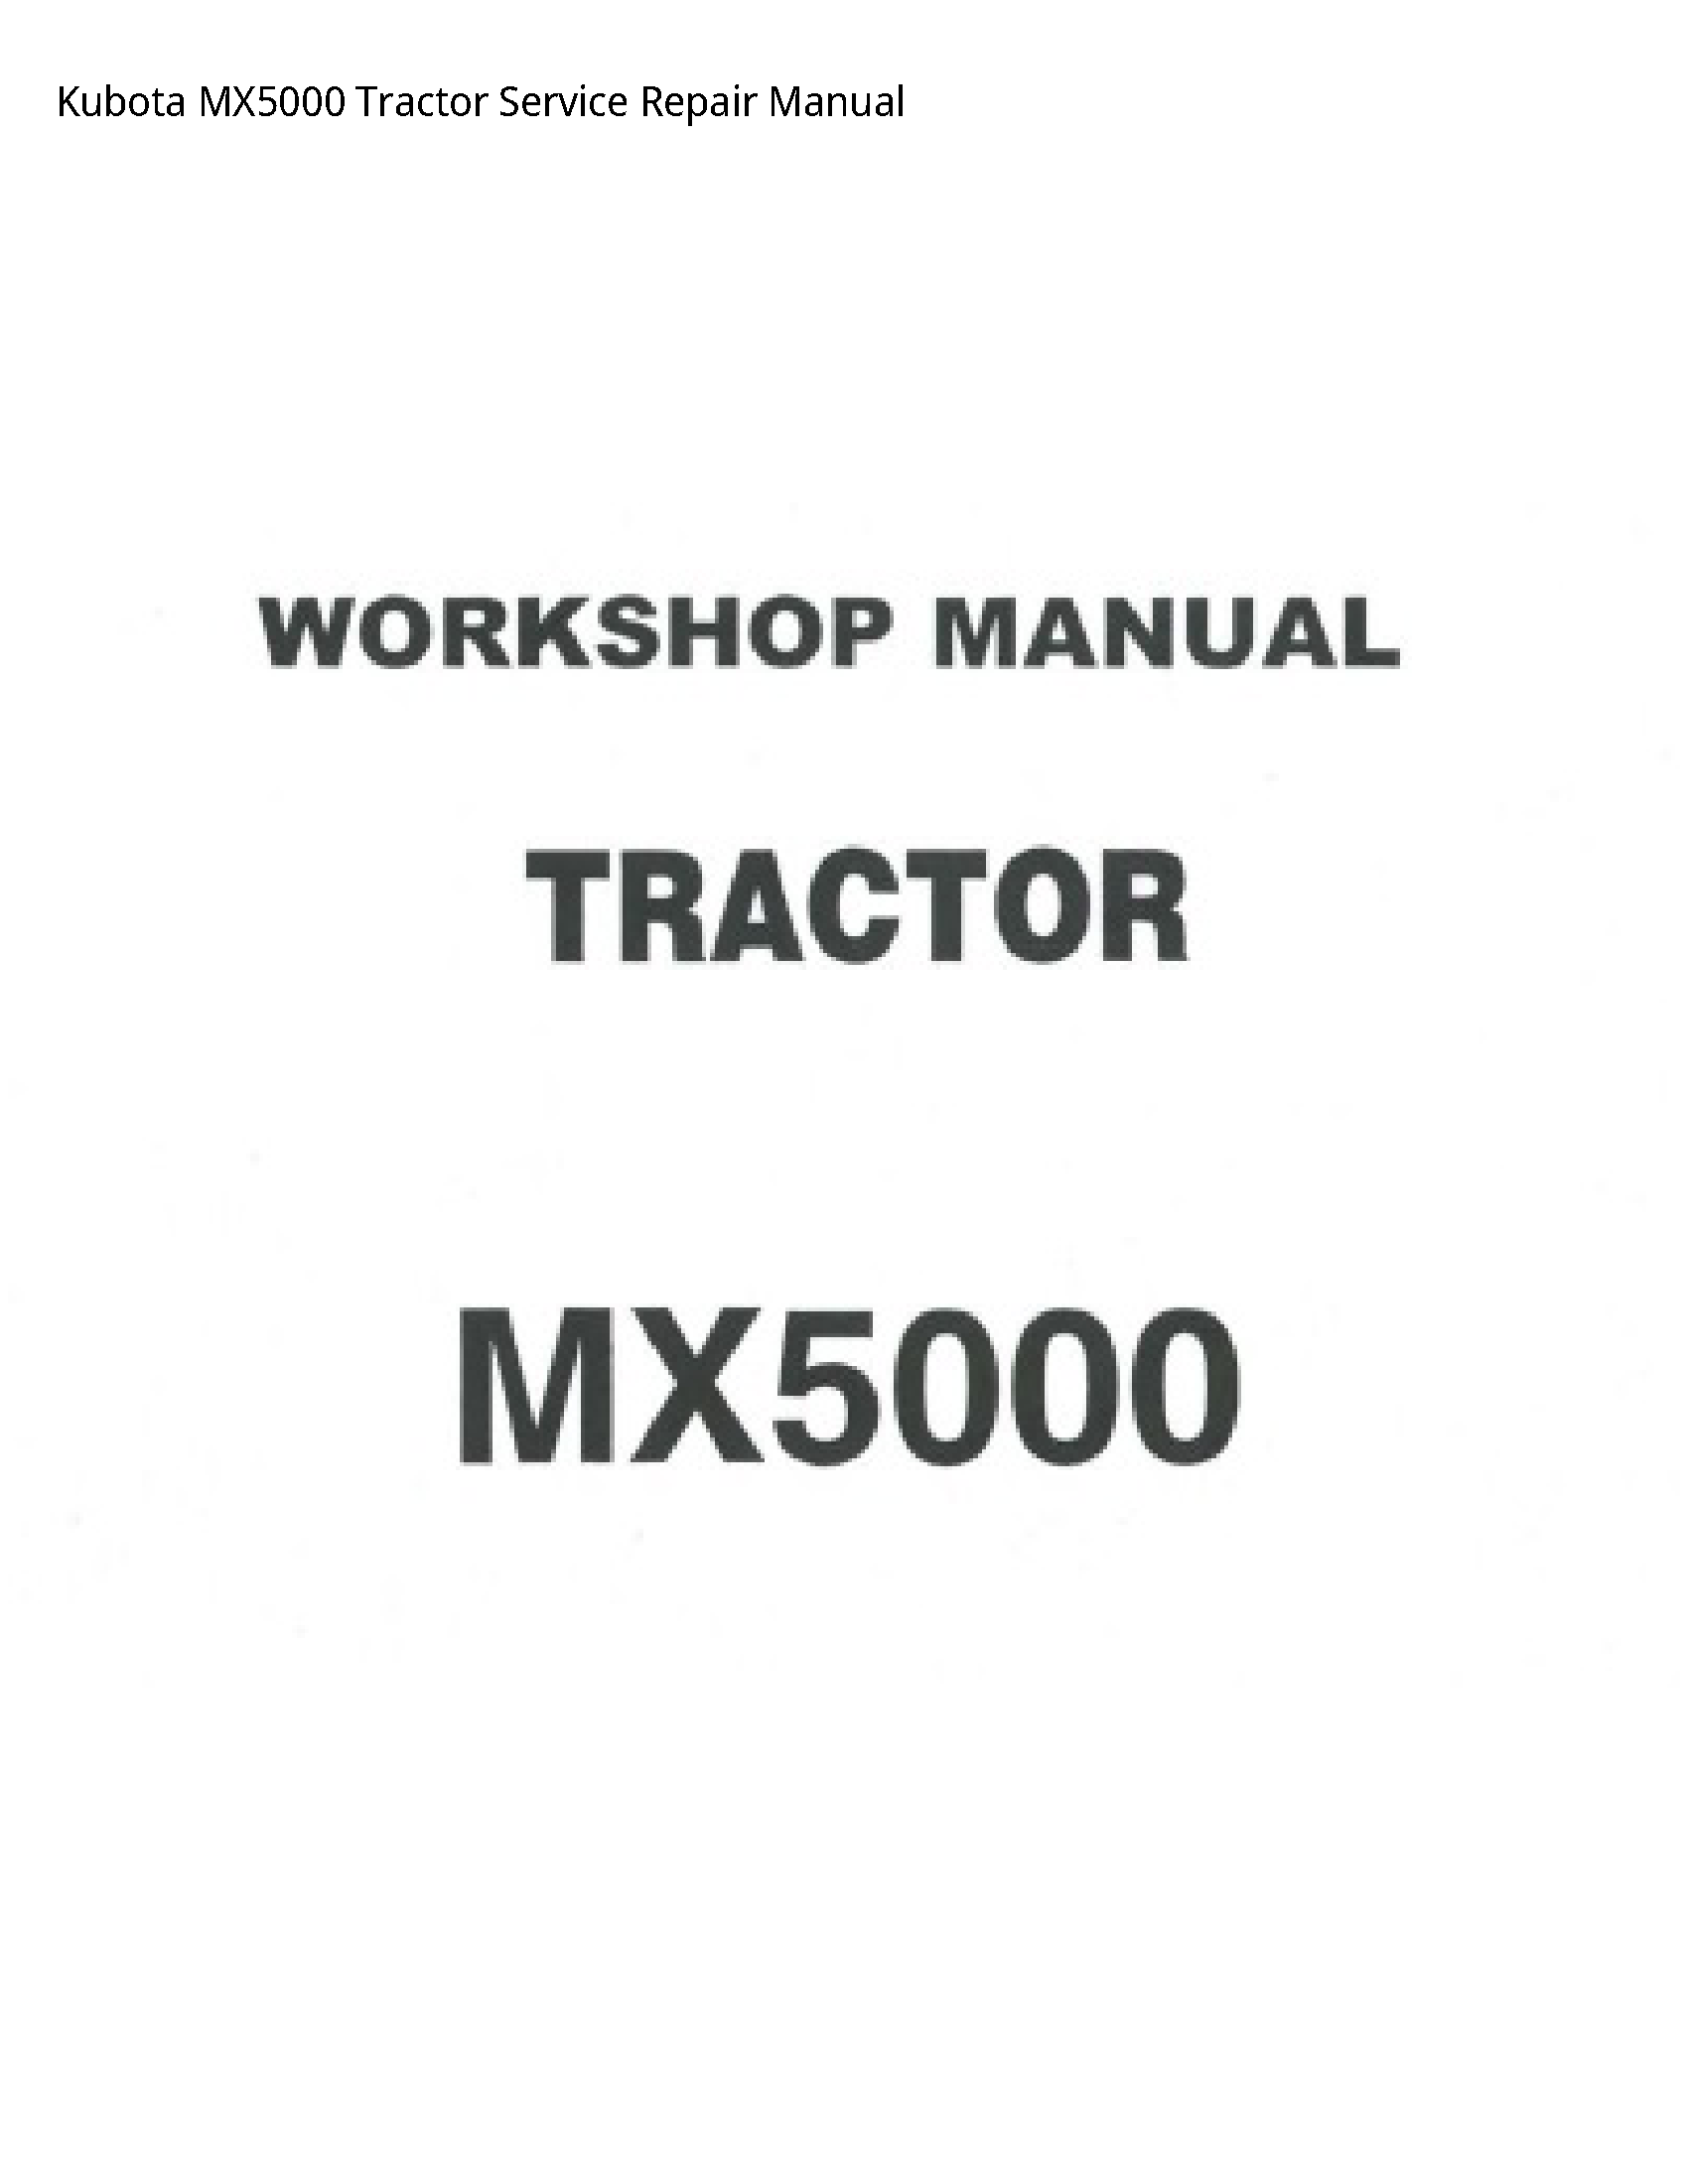 Kubota MX5000 Tractor manual